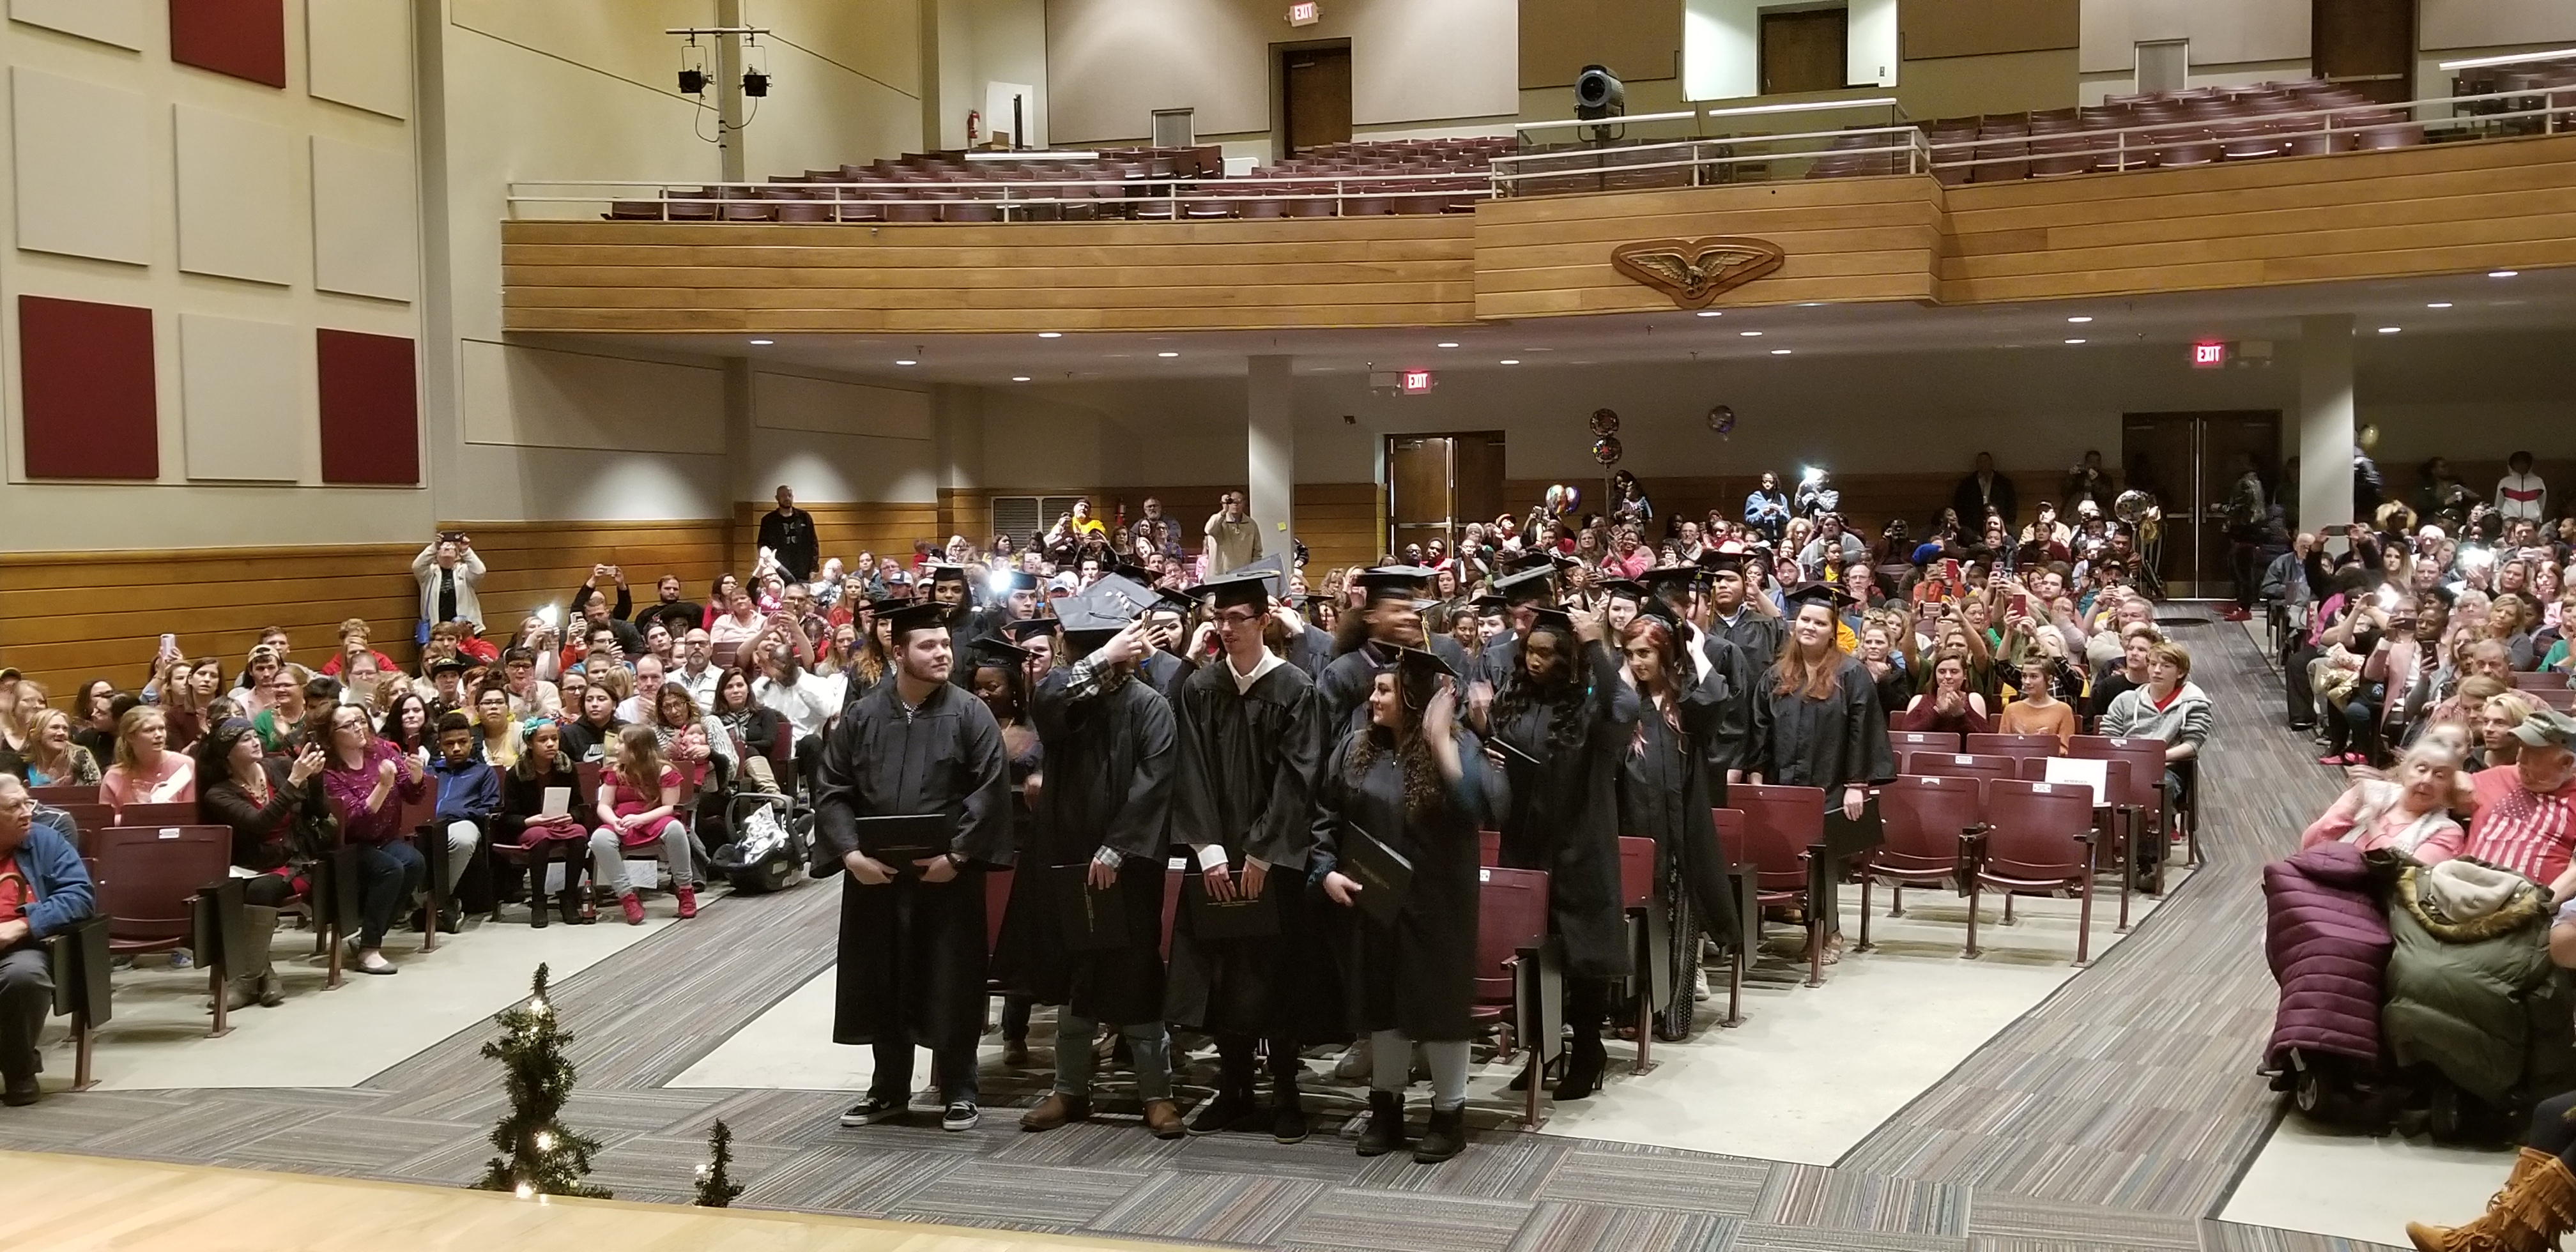 Dr. Paul Kelley Academy Graduation at Fulton High School, December 18, 2018